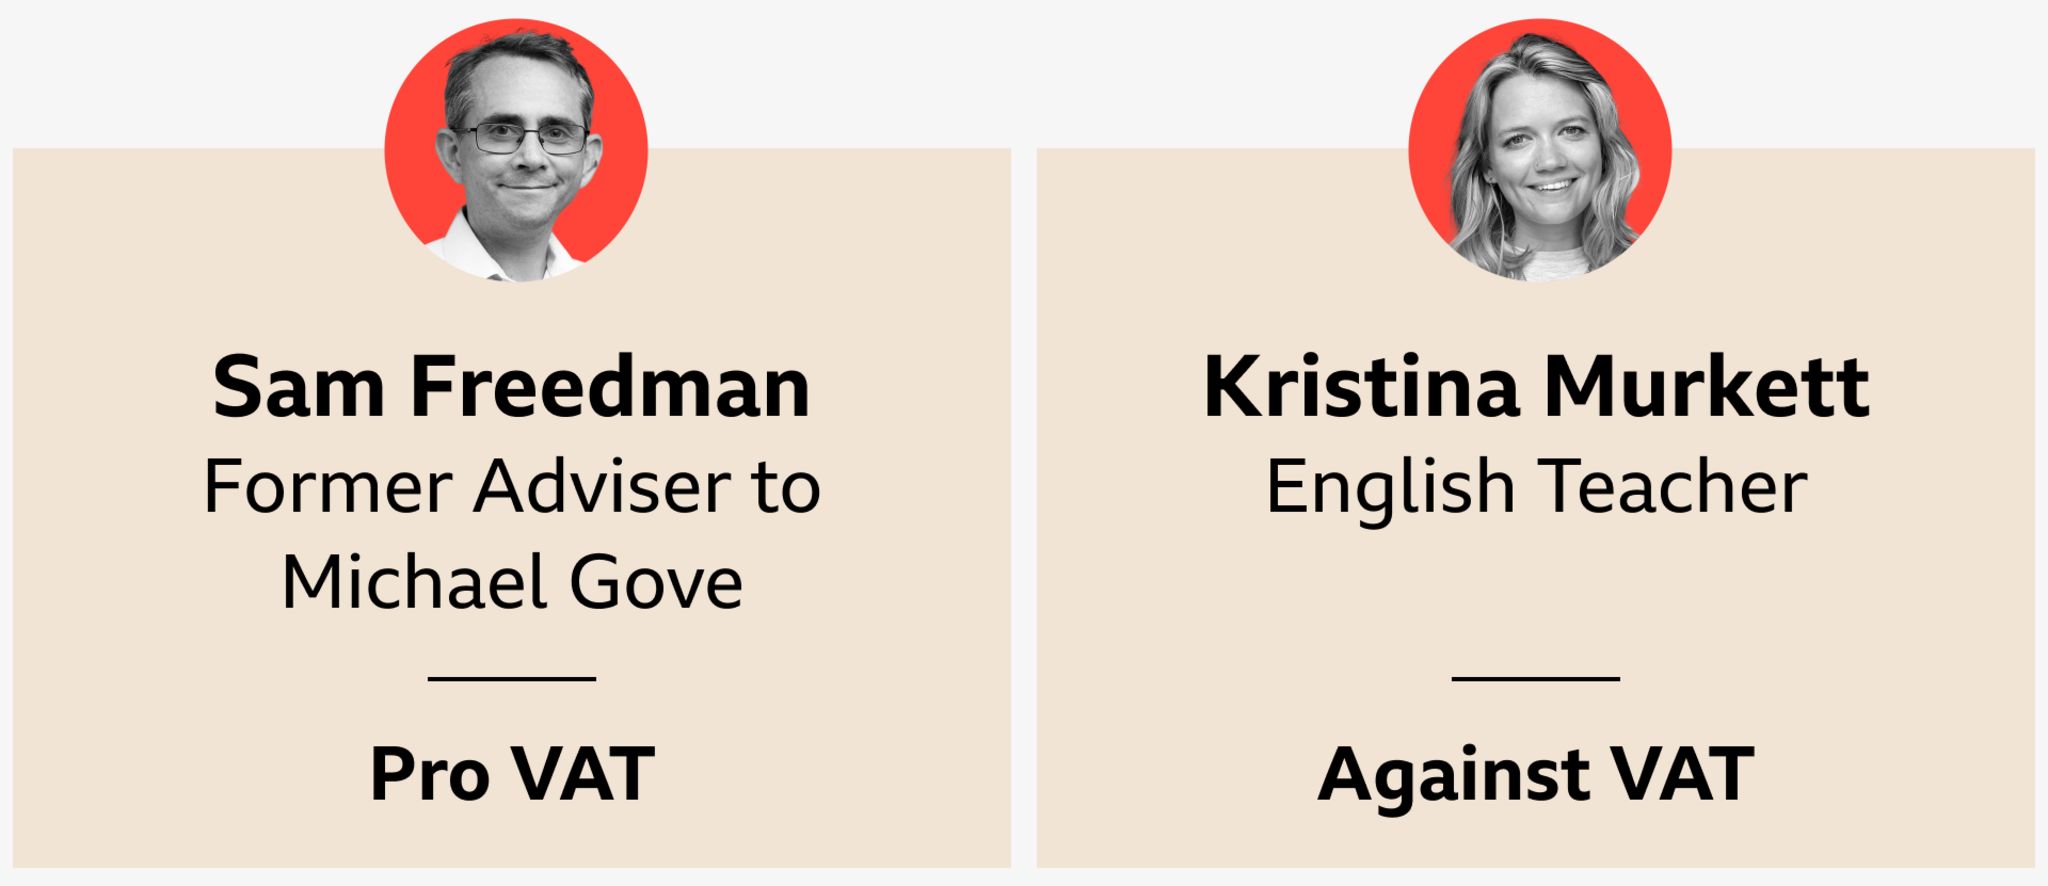 Meet the Participants: Sam Freedman, Former Adviser to Michael Gove (Pro-VAT) and Kristina Murkett English Teacher (Against VAT) 